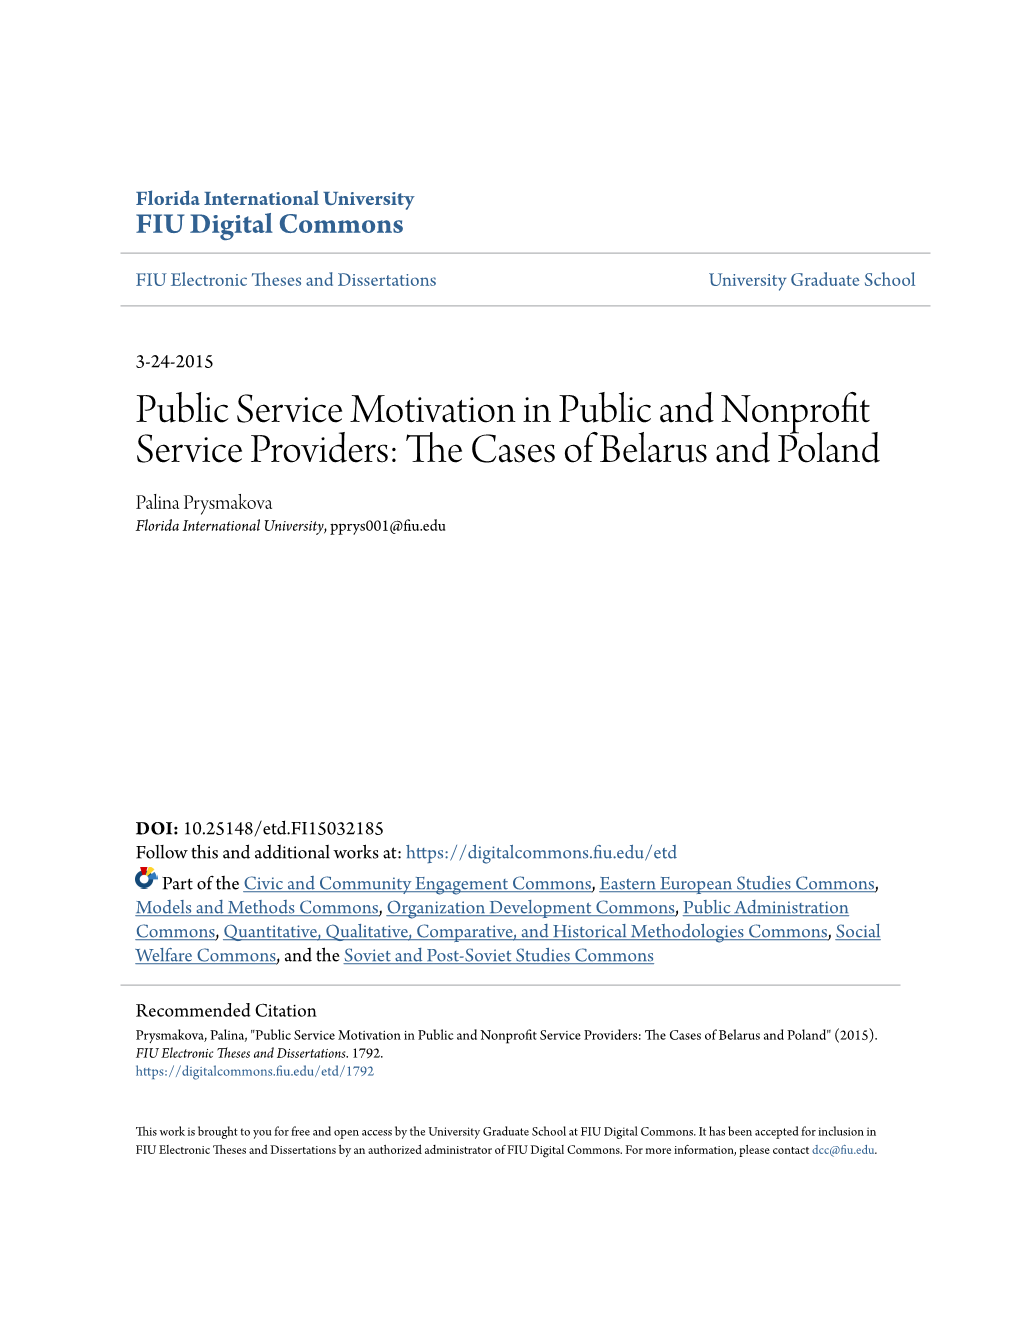 Public Service Motivation in Public and Nonprofit Service Providers